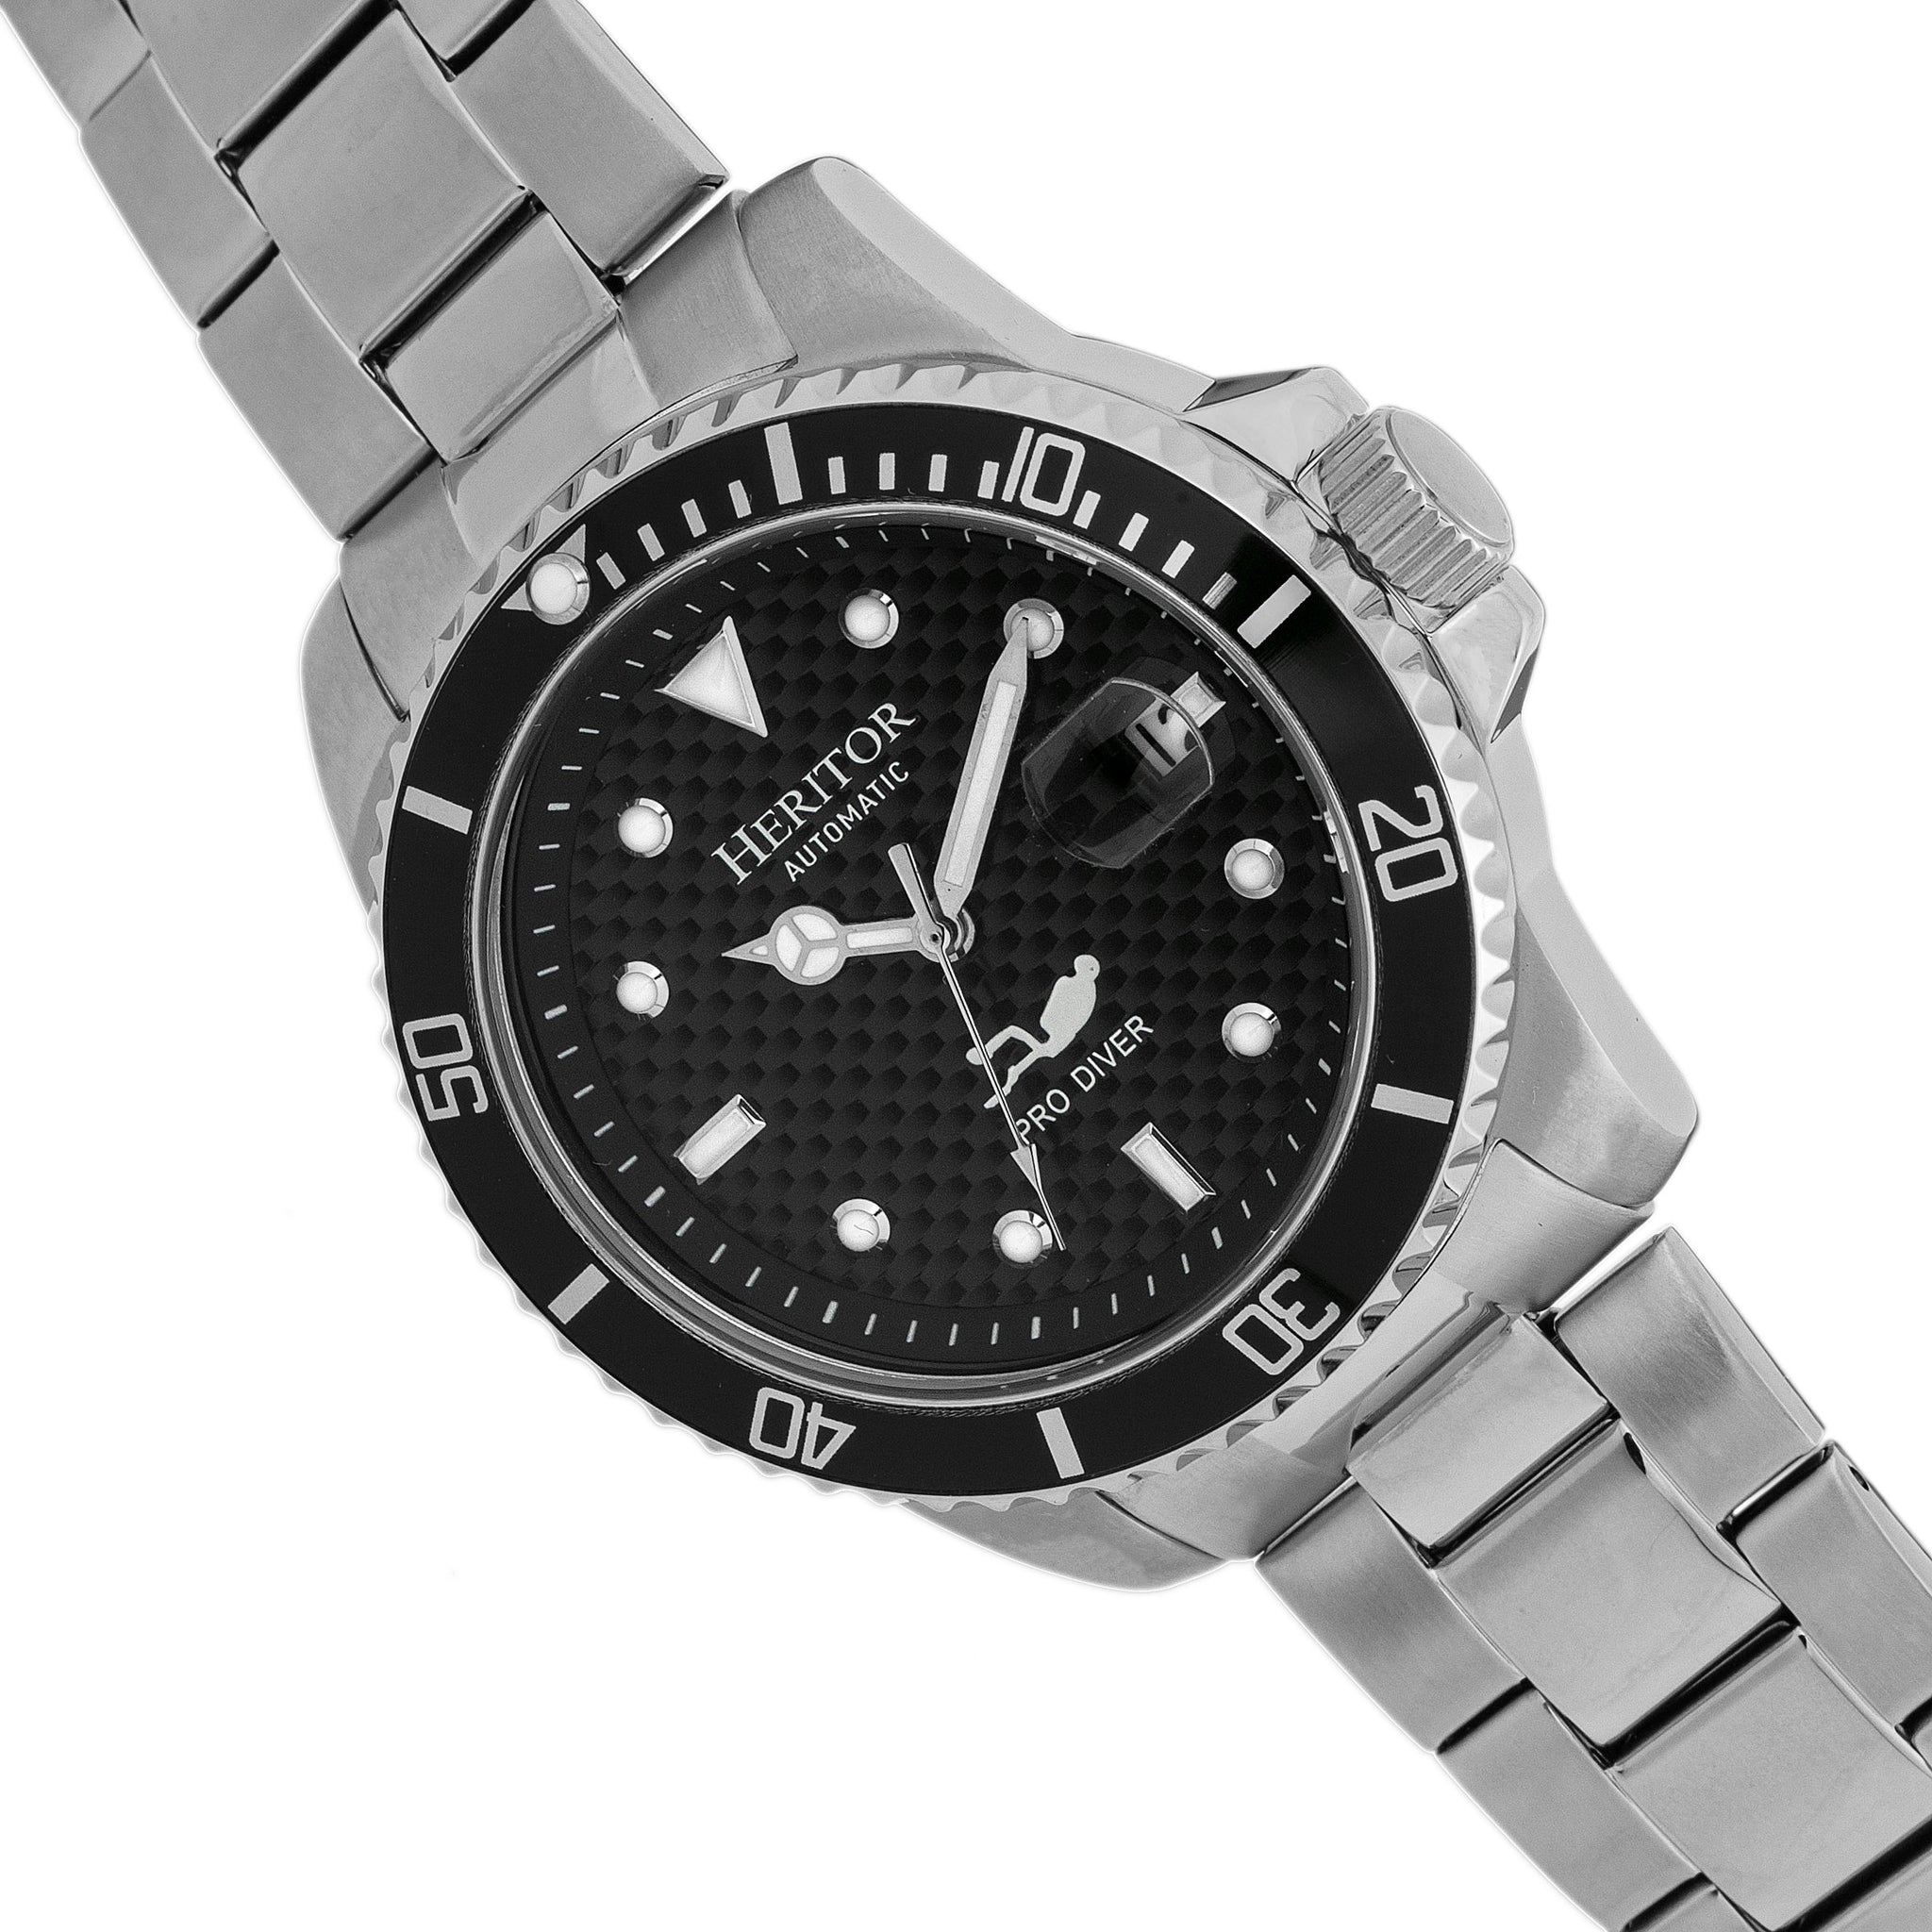 Heritor Automatic Lucius Bracelet Watch w/Date - Silver/Black - HERHR7802